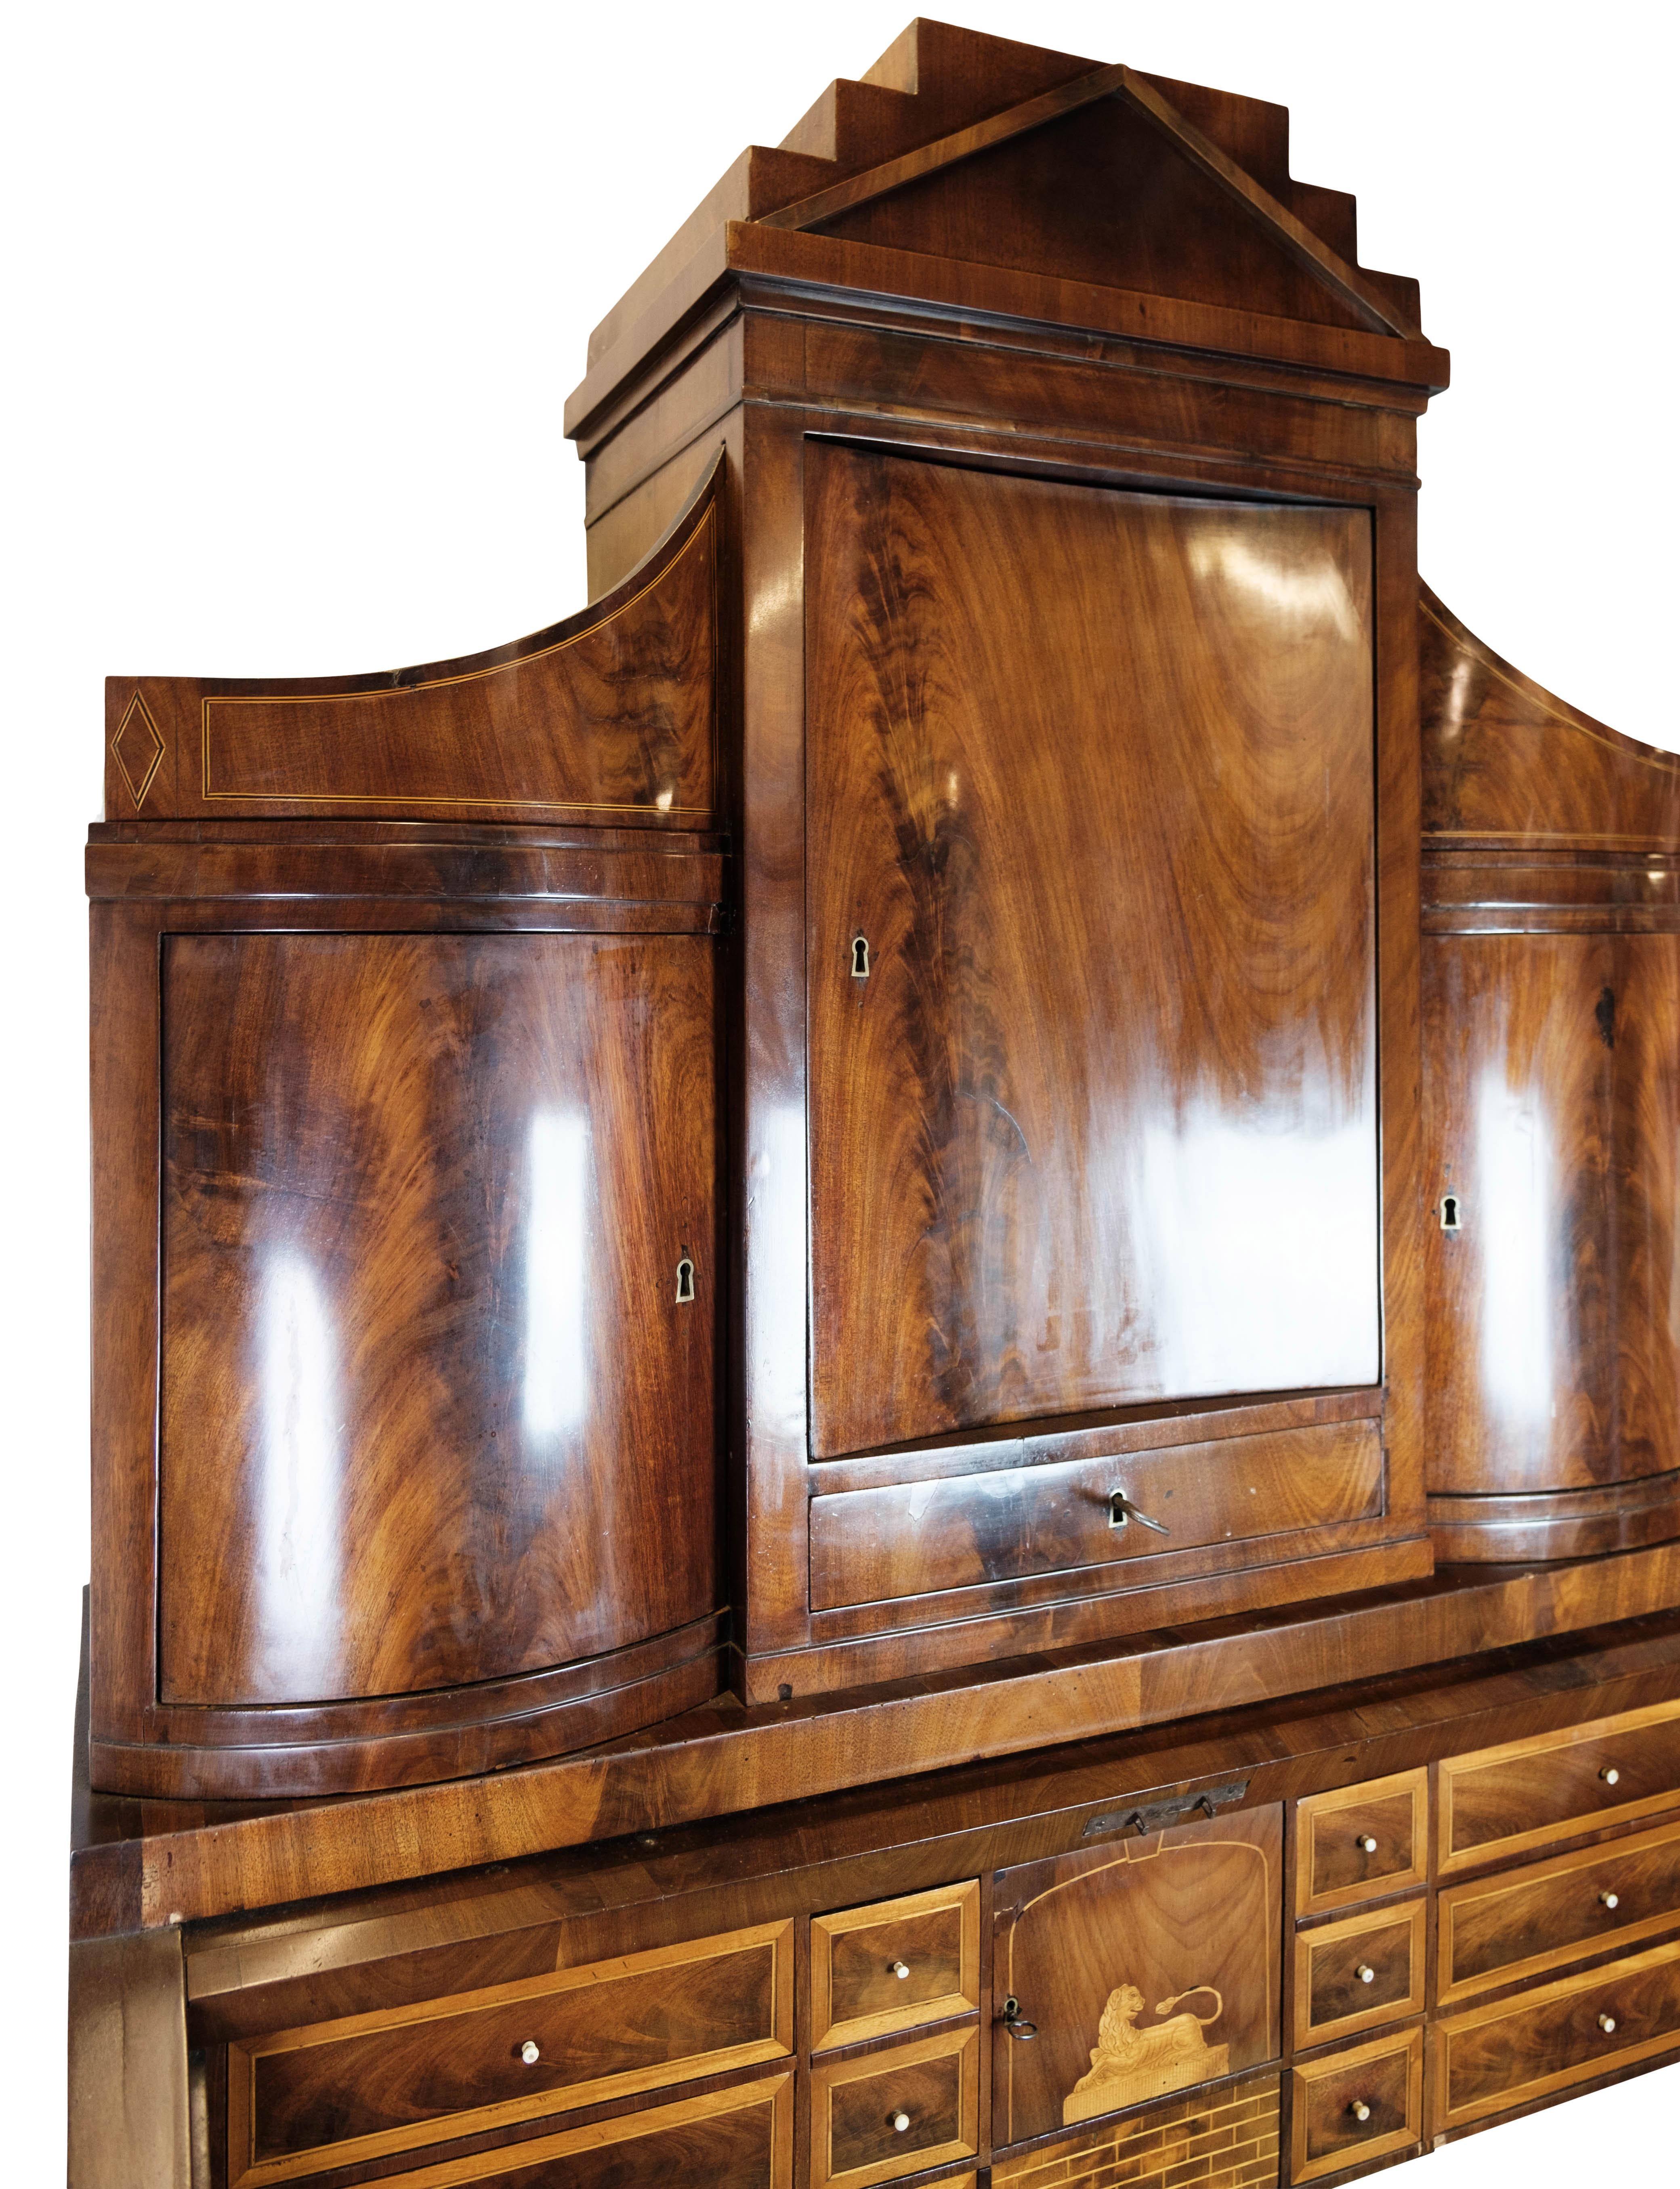 Danish Large Empire Bureau of Hand Polished Mahogany with Inlaid Wood, 1820s For Sale